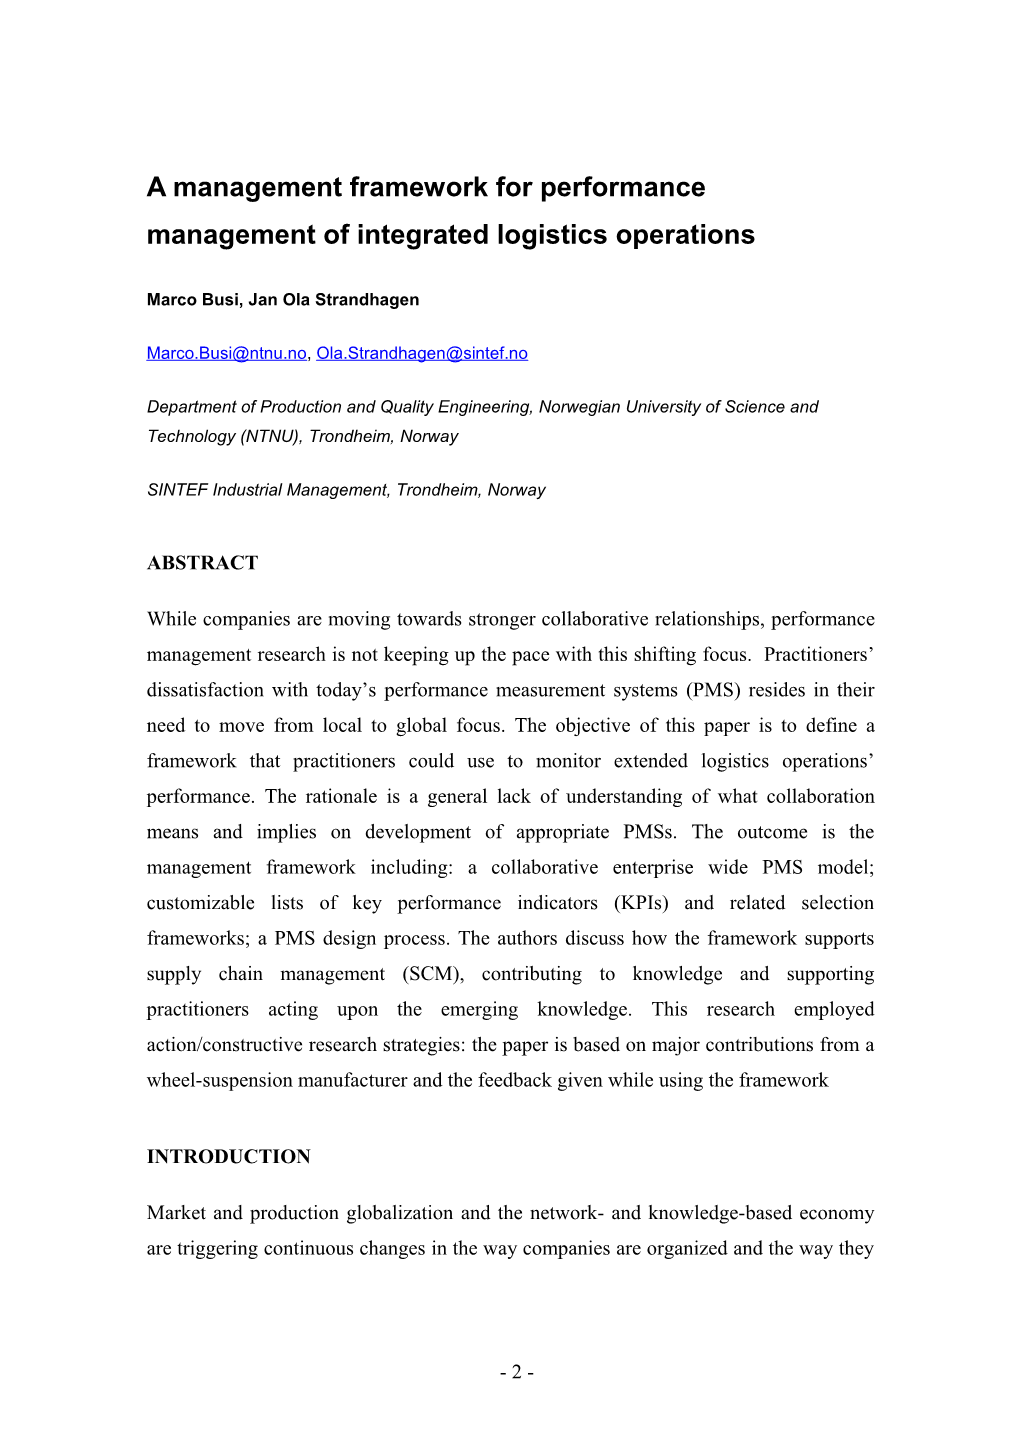 A Management Framework for Performance Management of Integrated Logistics Operations